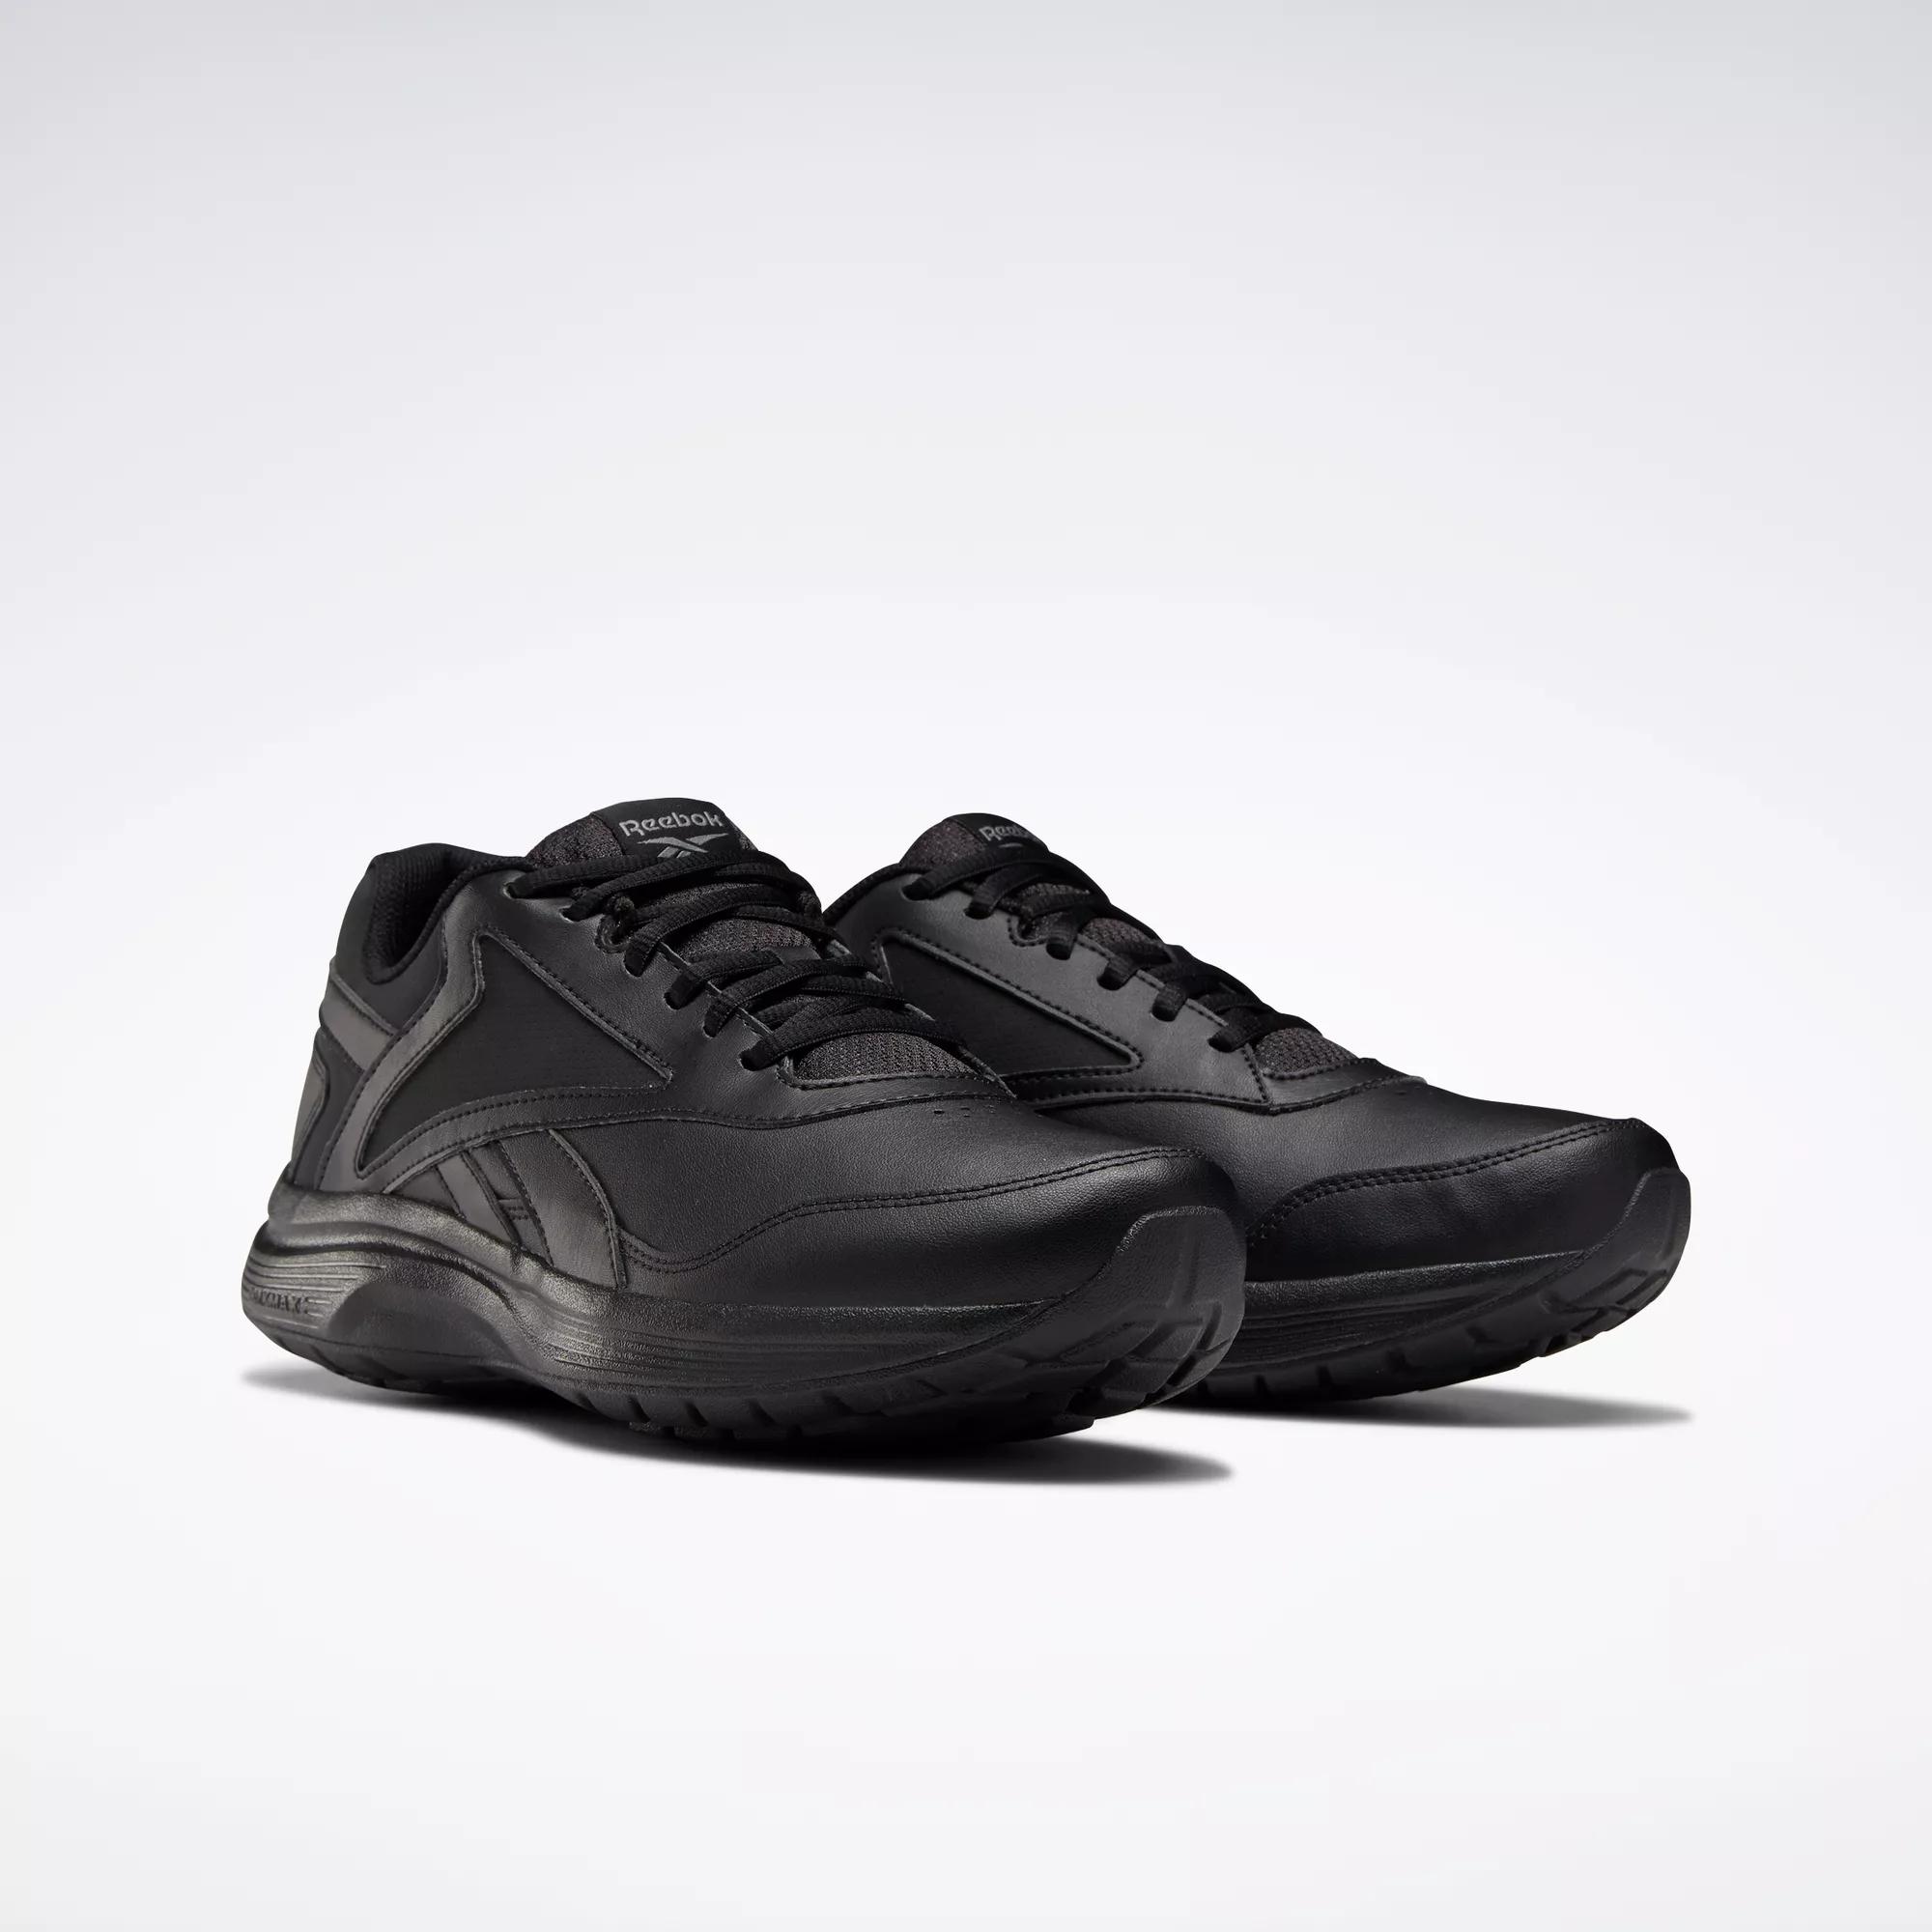 Walk Ultra 7 DMX MAX Men's Shoes - Black / Cold Grey / Collegiate | Reebok